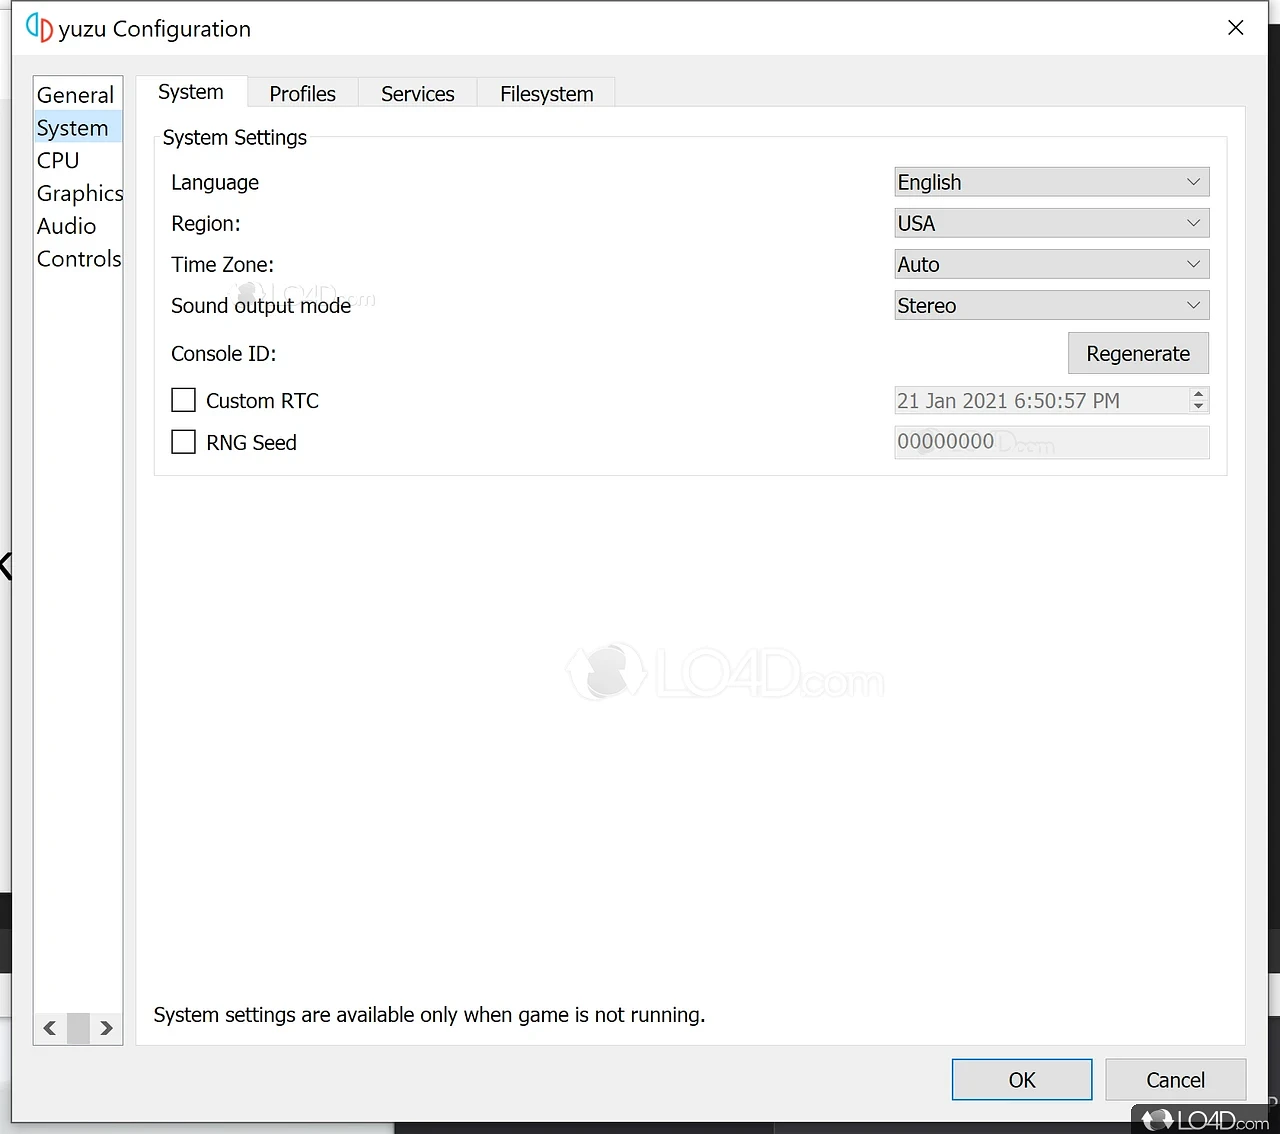 Yuzu Switch Emulator Download for PC Windows 10, 7, 8 32/64 bit